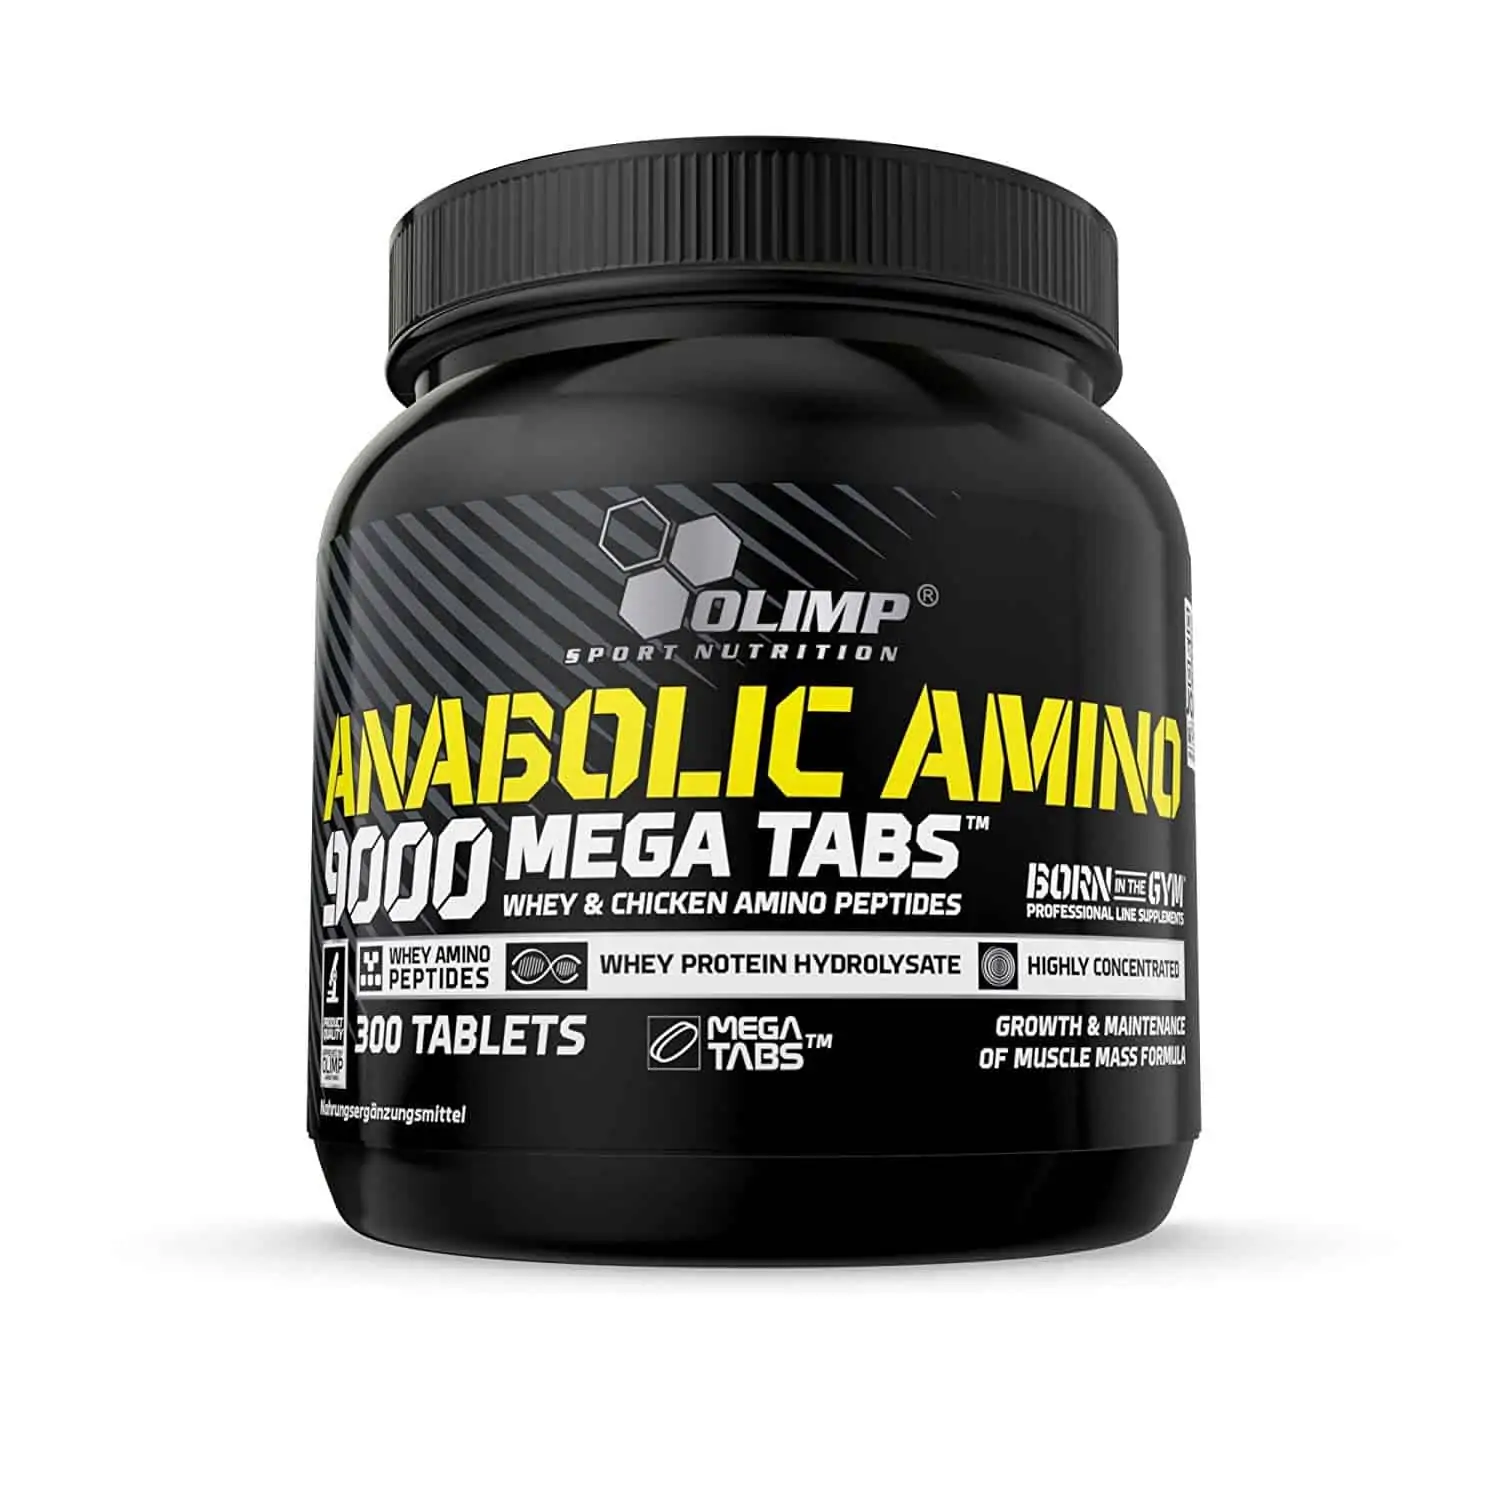 krem orman fizikçi  Olimp Anabolic Amino 9000 Mega Tabs (Amino Acids + Protein) 300 Tablets -  low price, check reviews and dosage